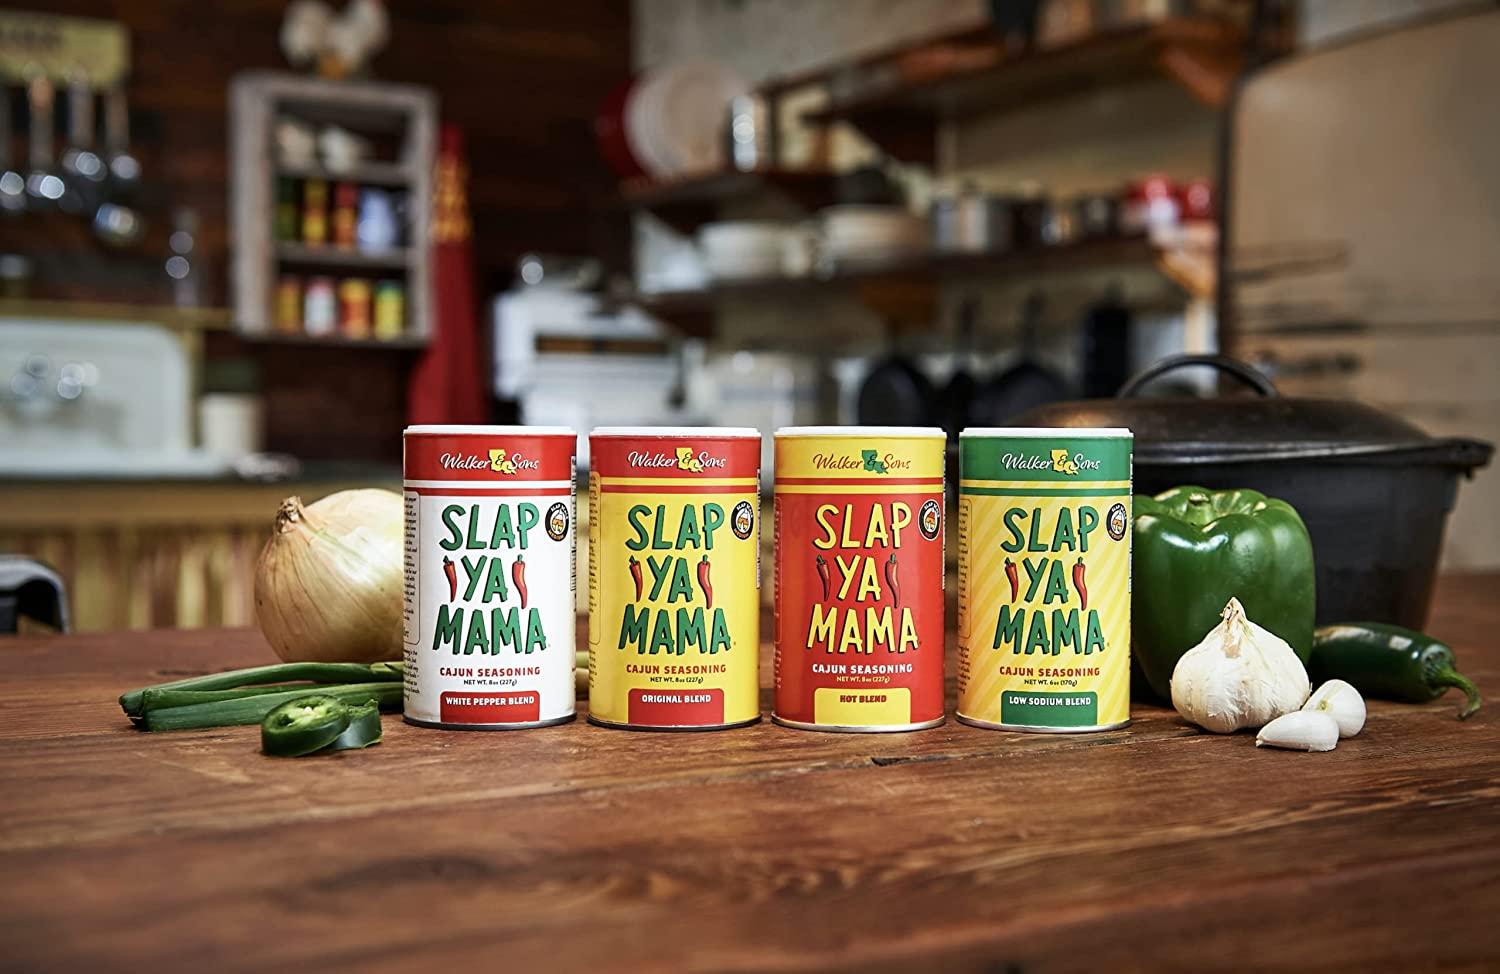 Slap Ya Mama Cajun Seasoning Original Blend